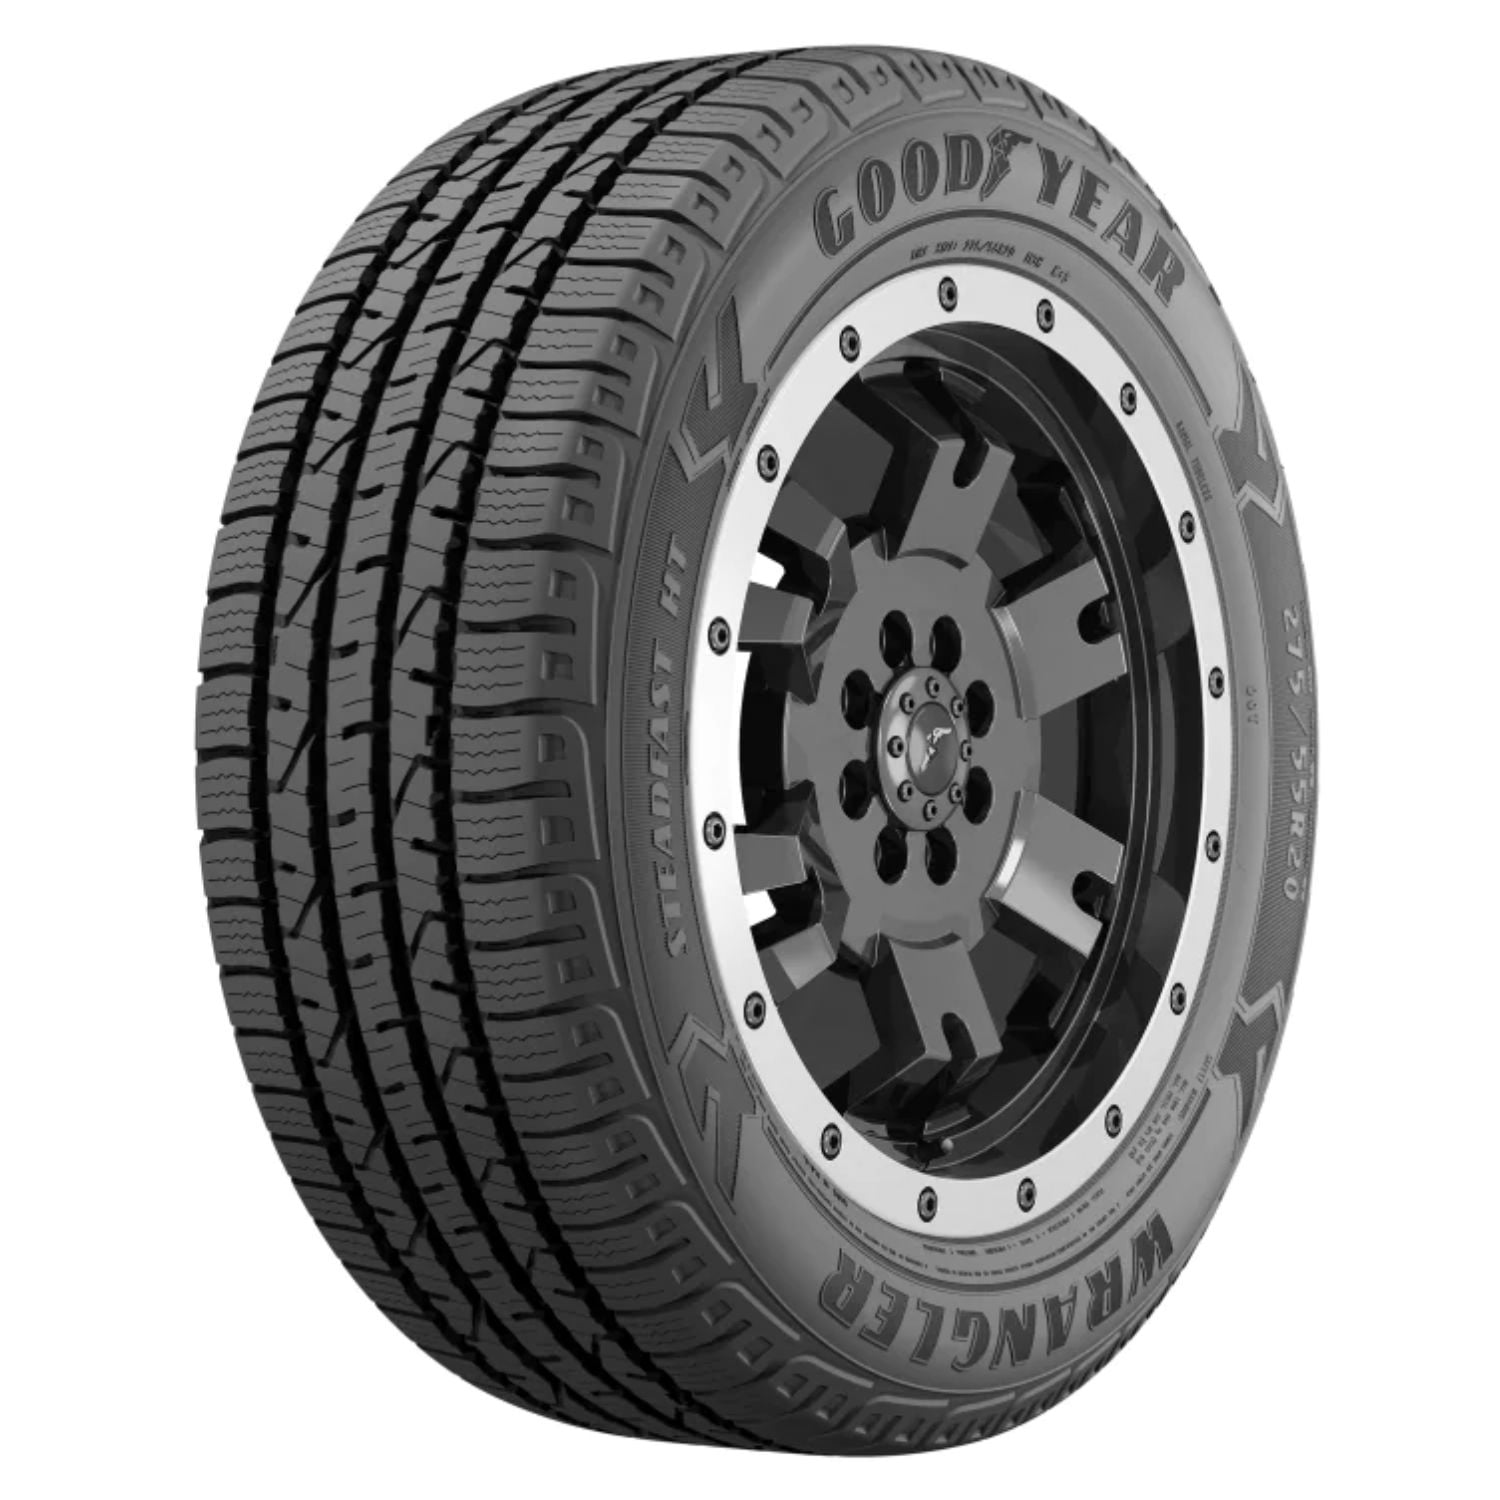 Goodyear Wrangler Steadfast HT All Season 275/60R20 115H Light Truck Tire -  